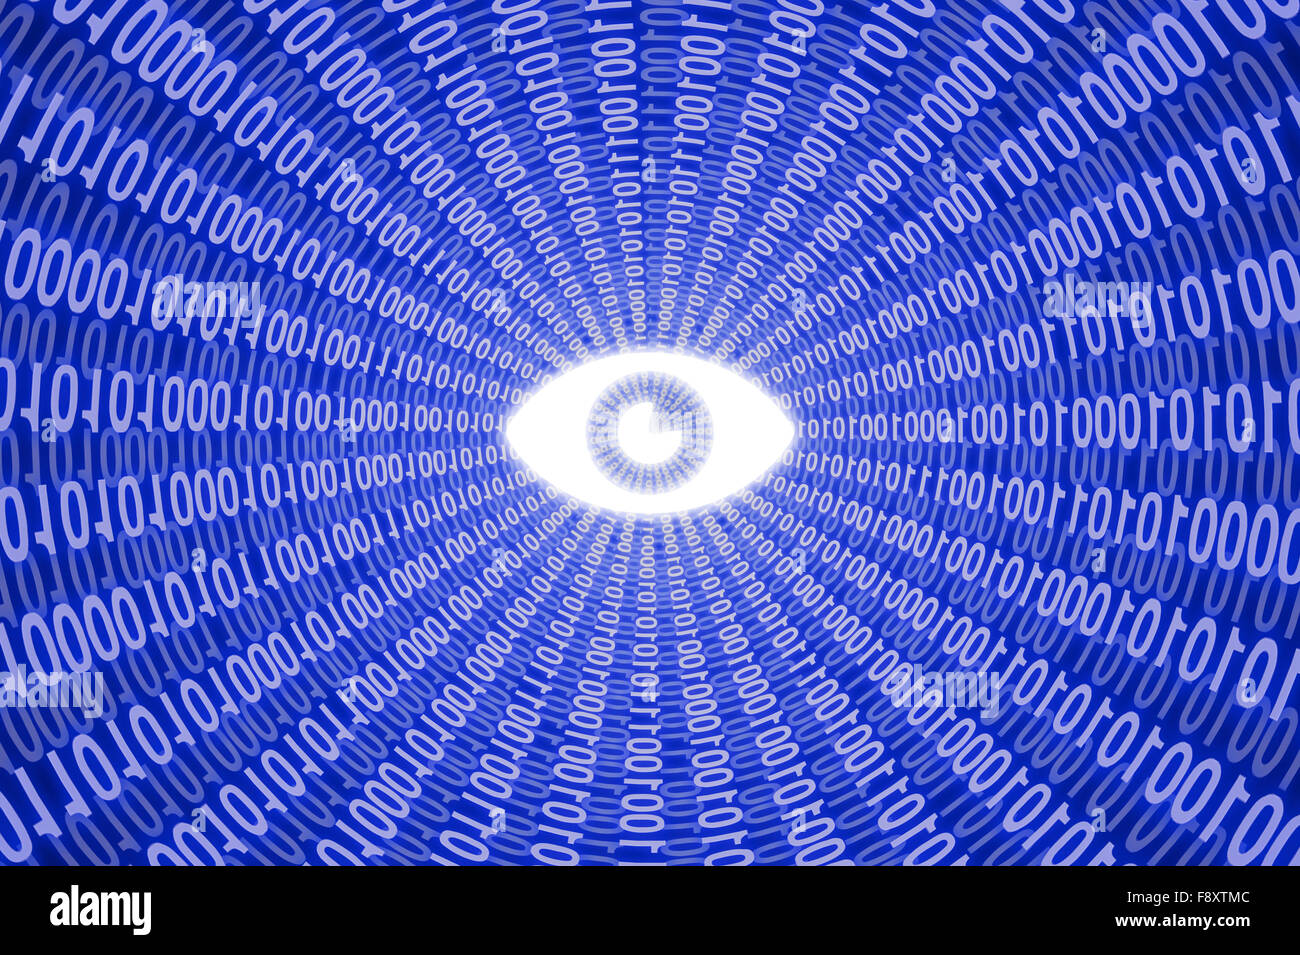 White digital eye in blue data stream Stock Photo